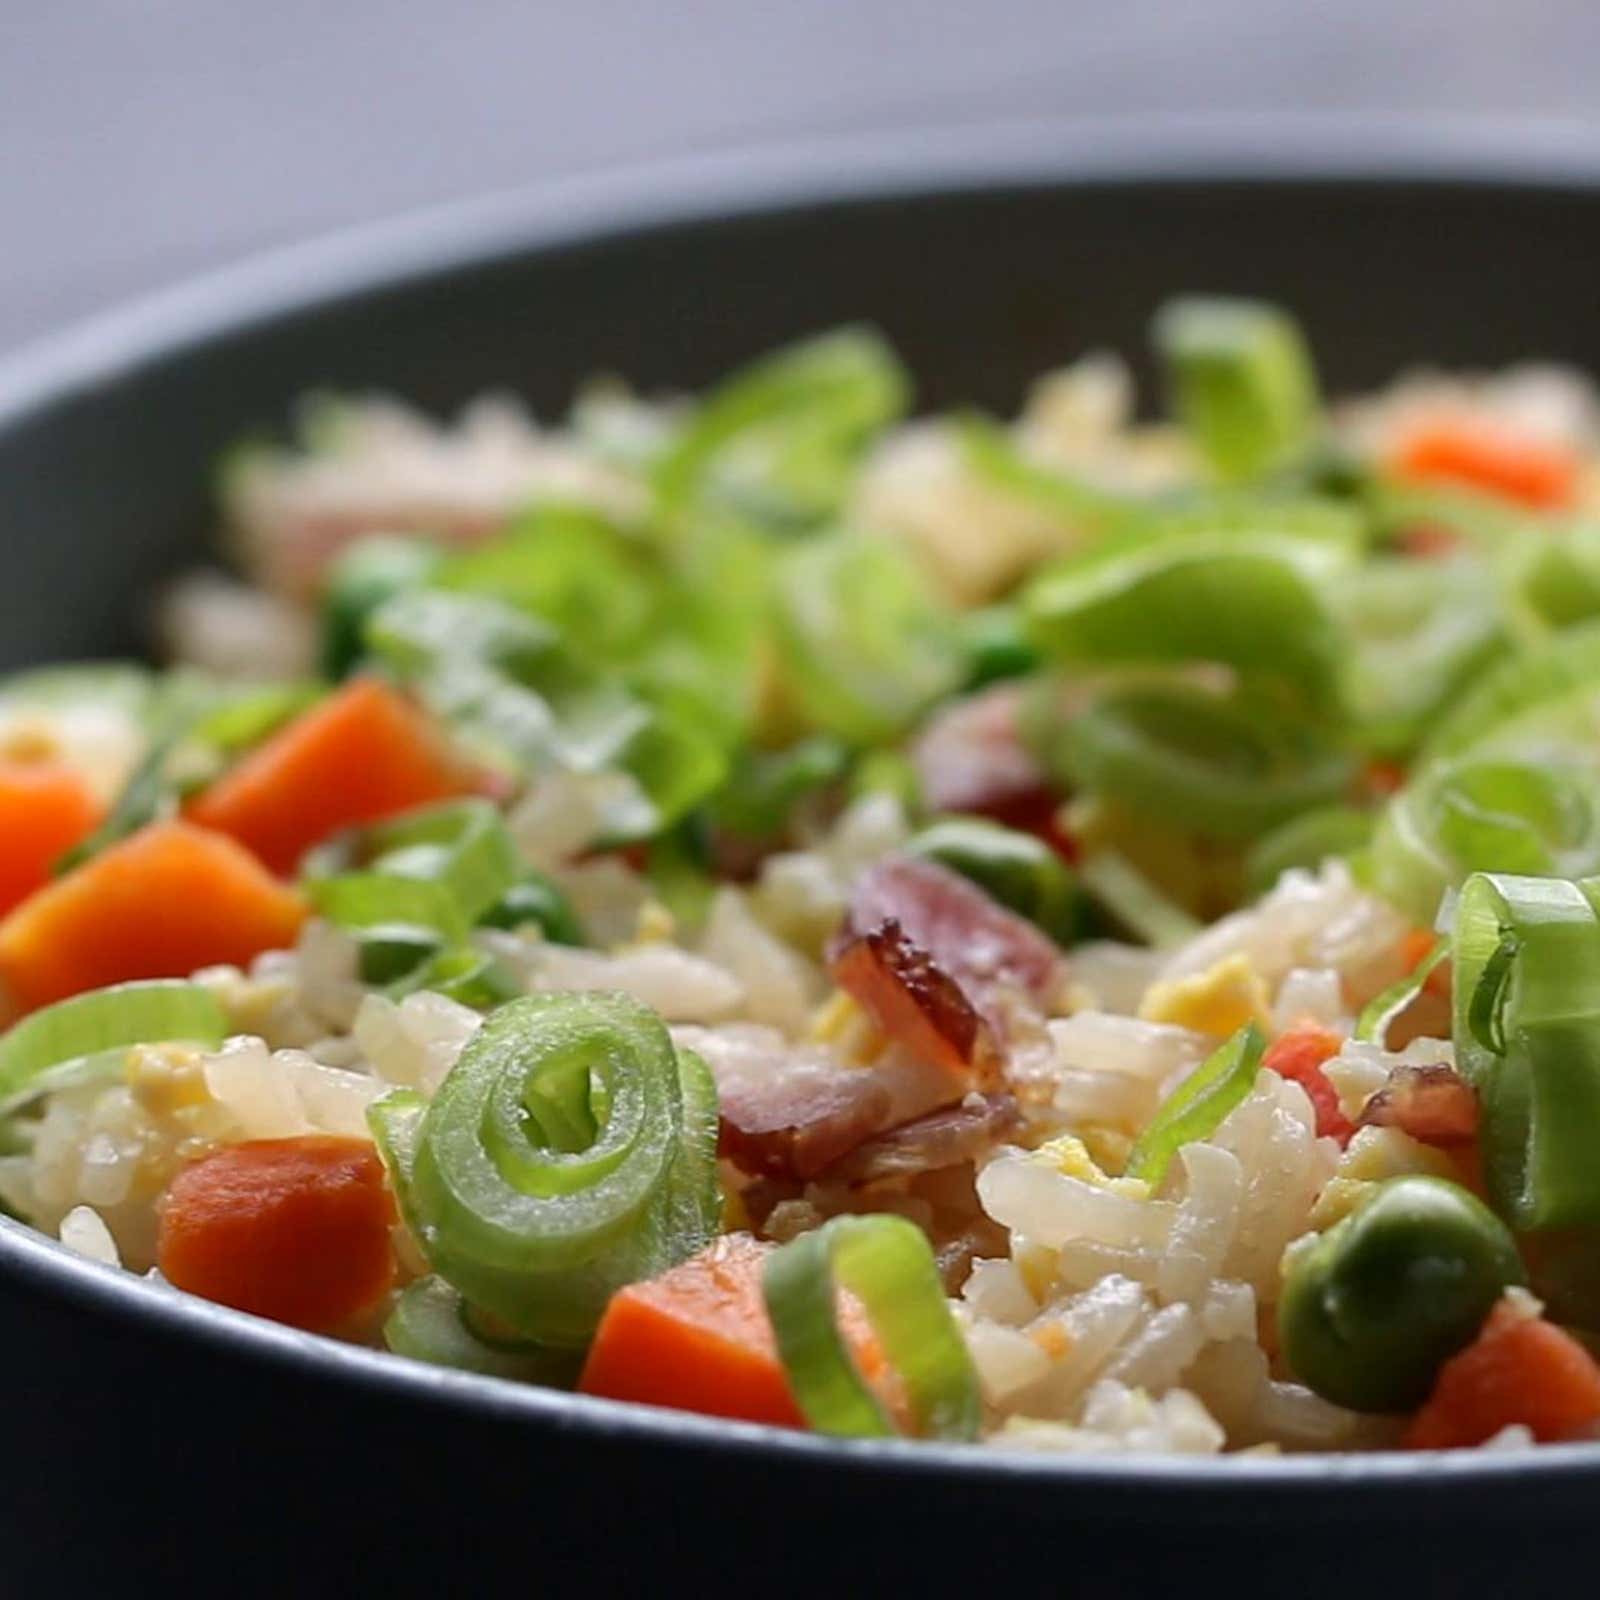 Microwave “Fried” Rice Recipe by Tasty